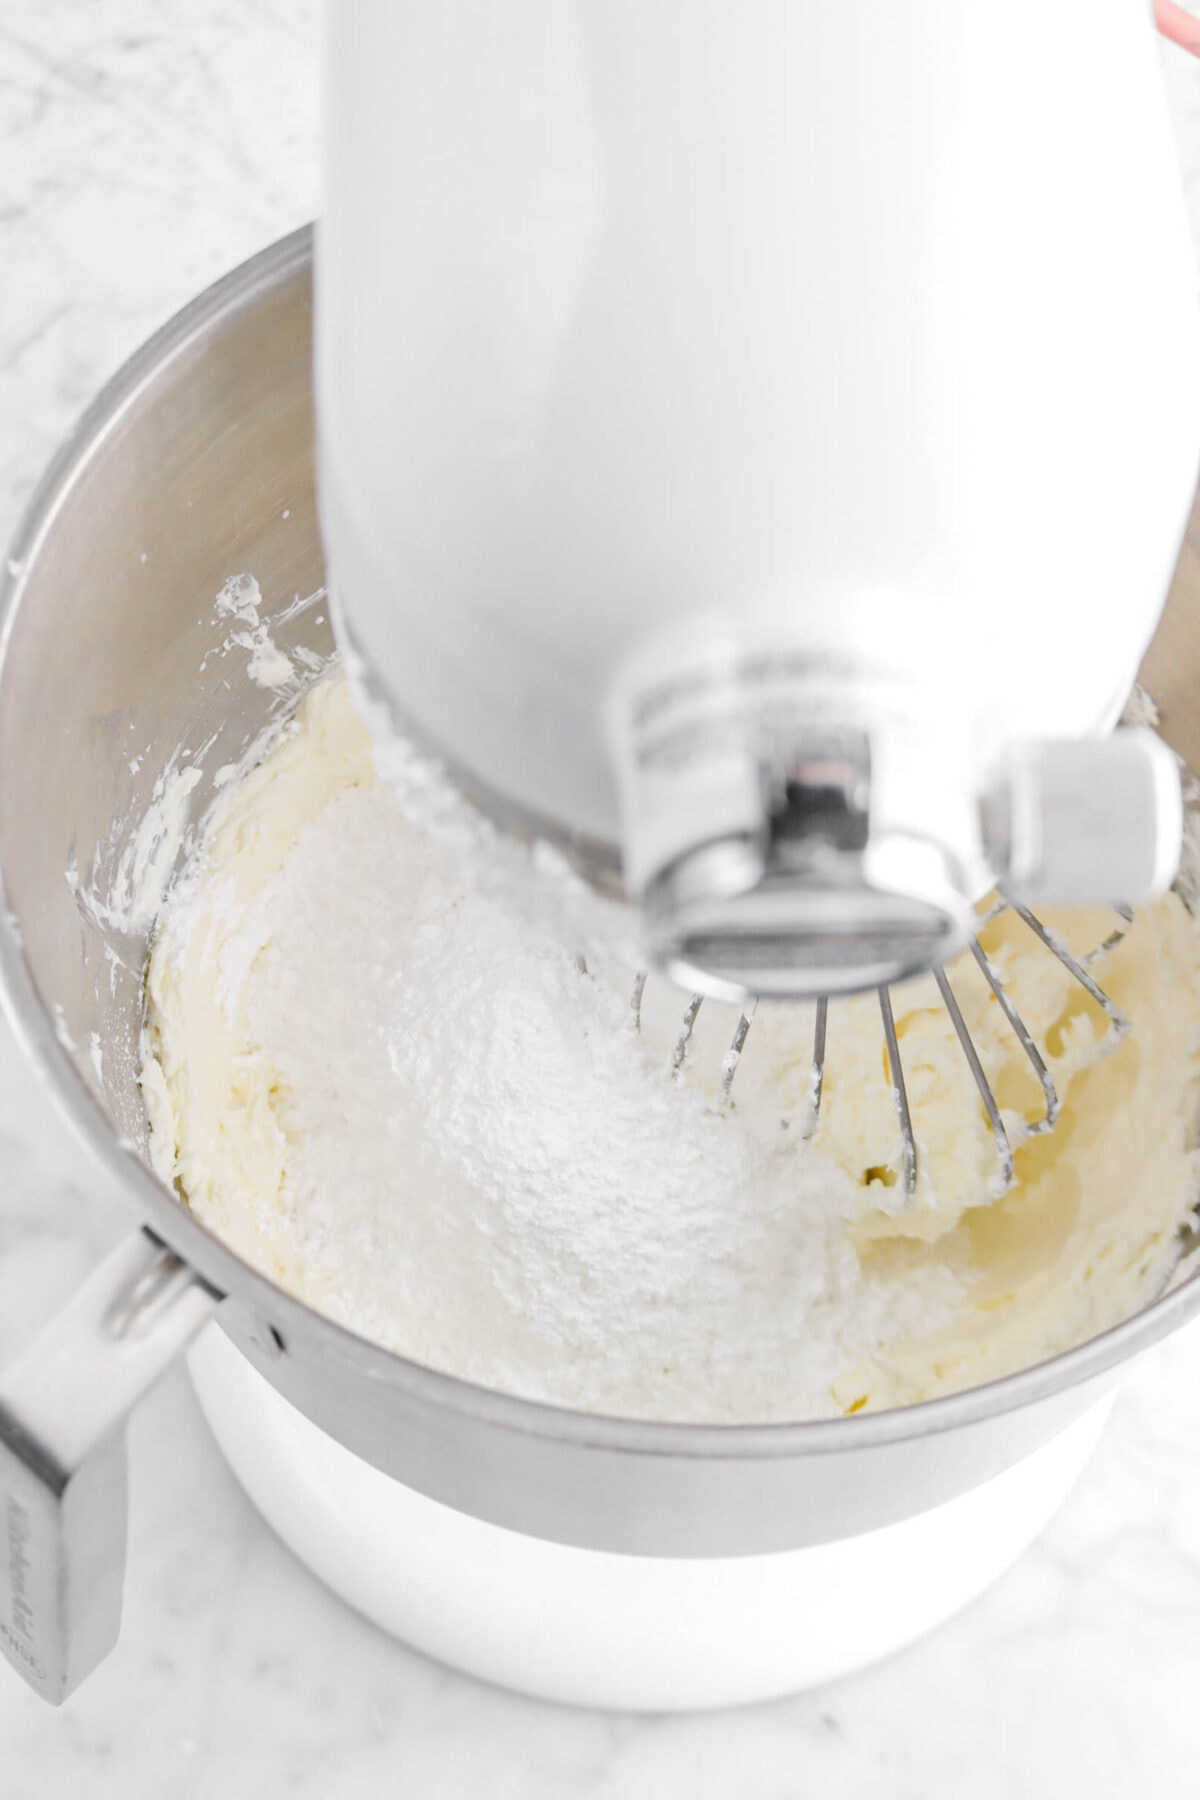 powdered sugar added to cream cheese mixture